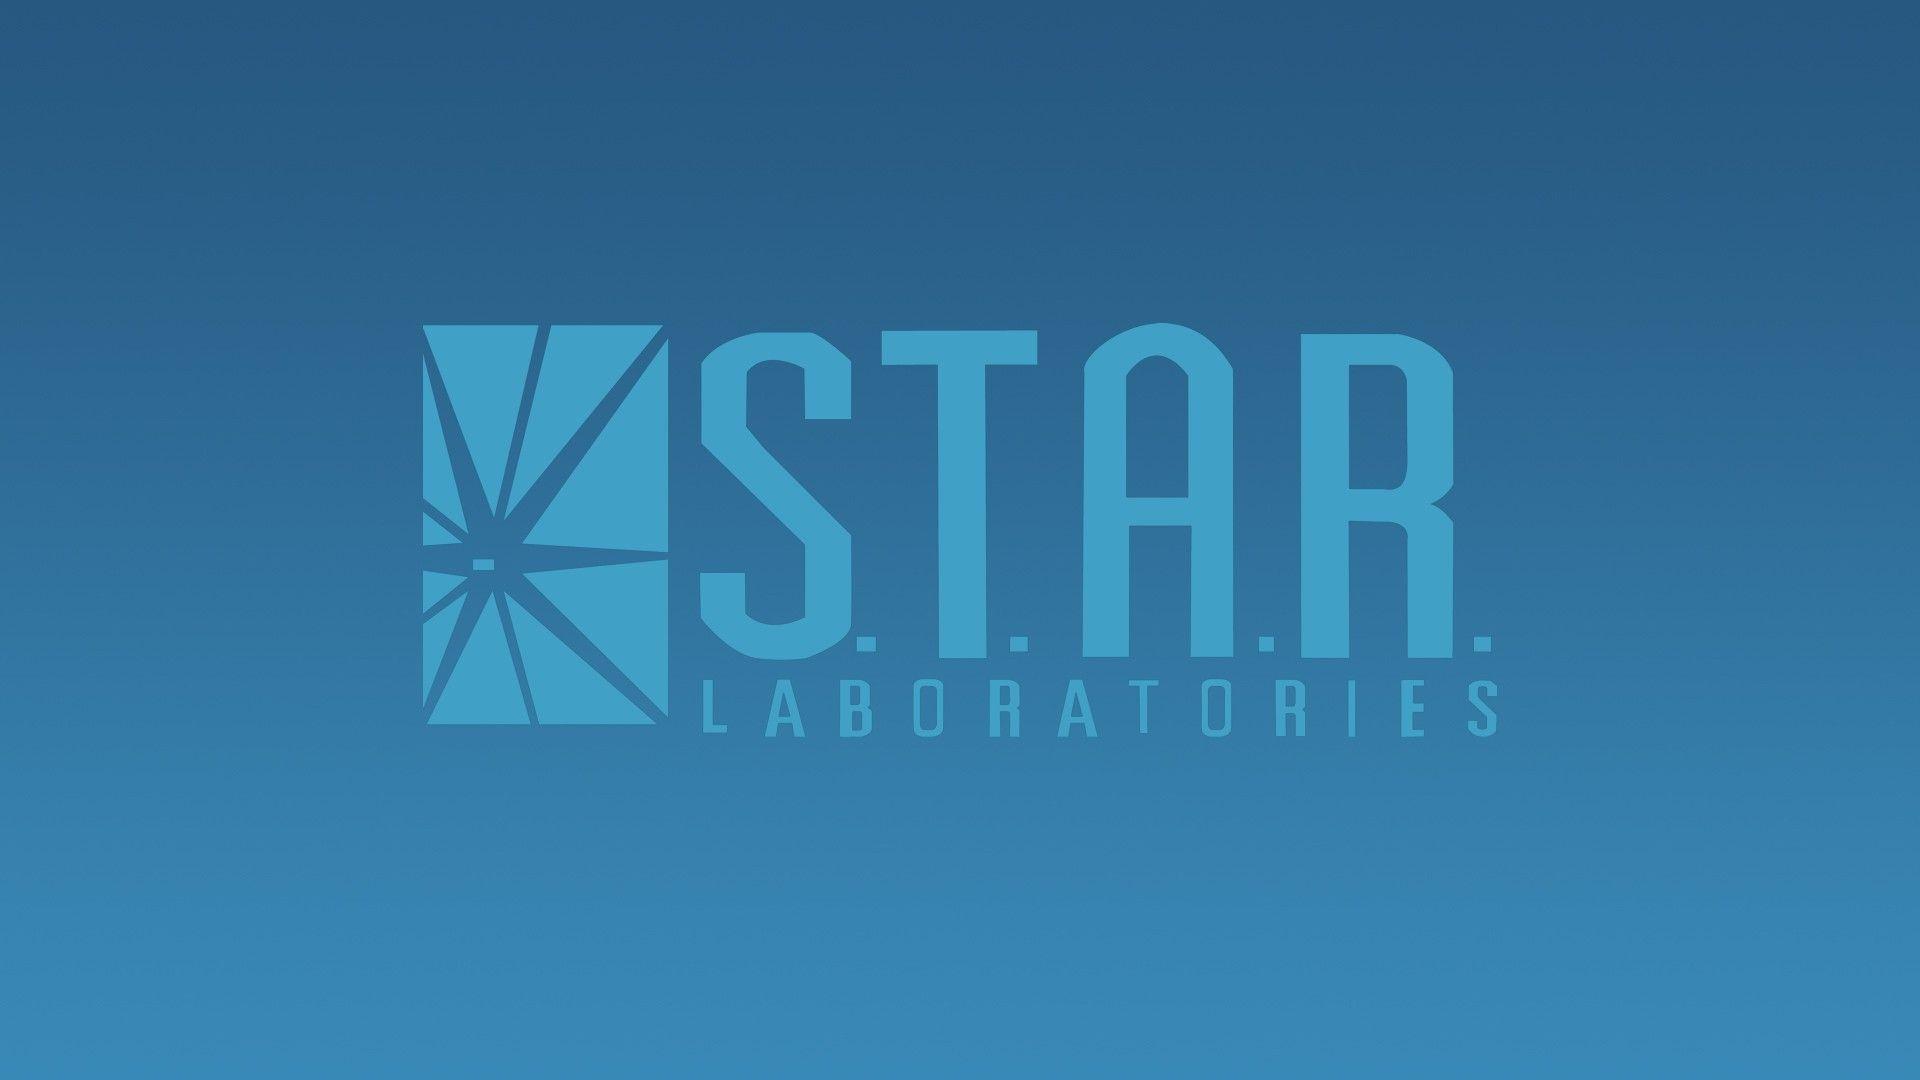 The Flash Star Labs Desktop Wallpaper